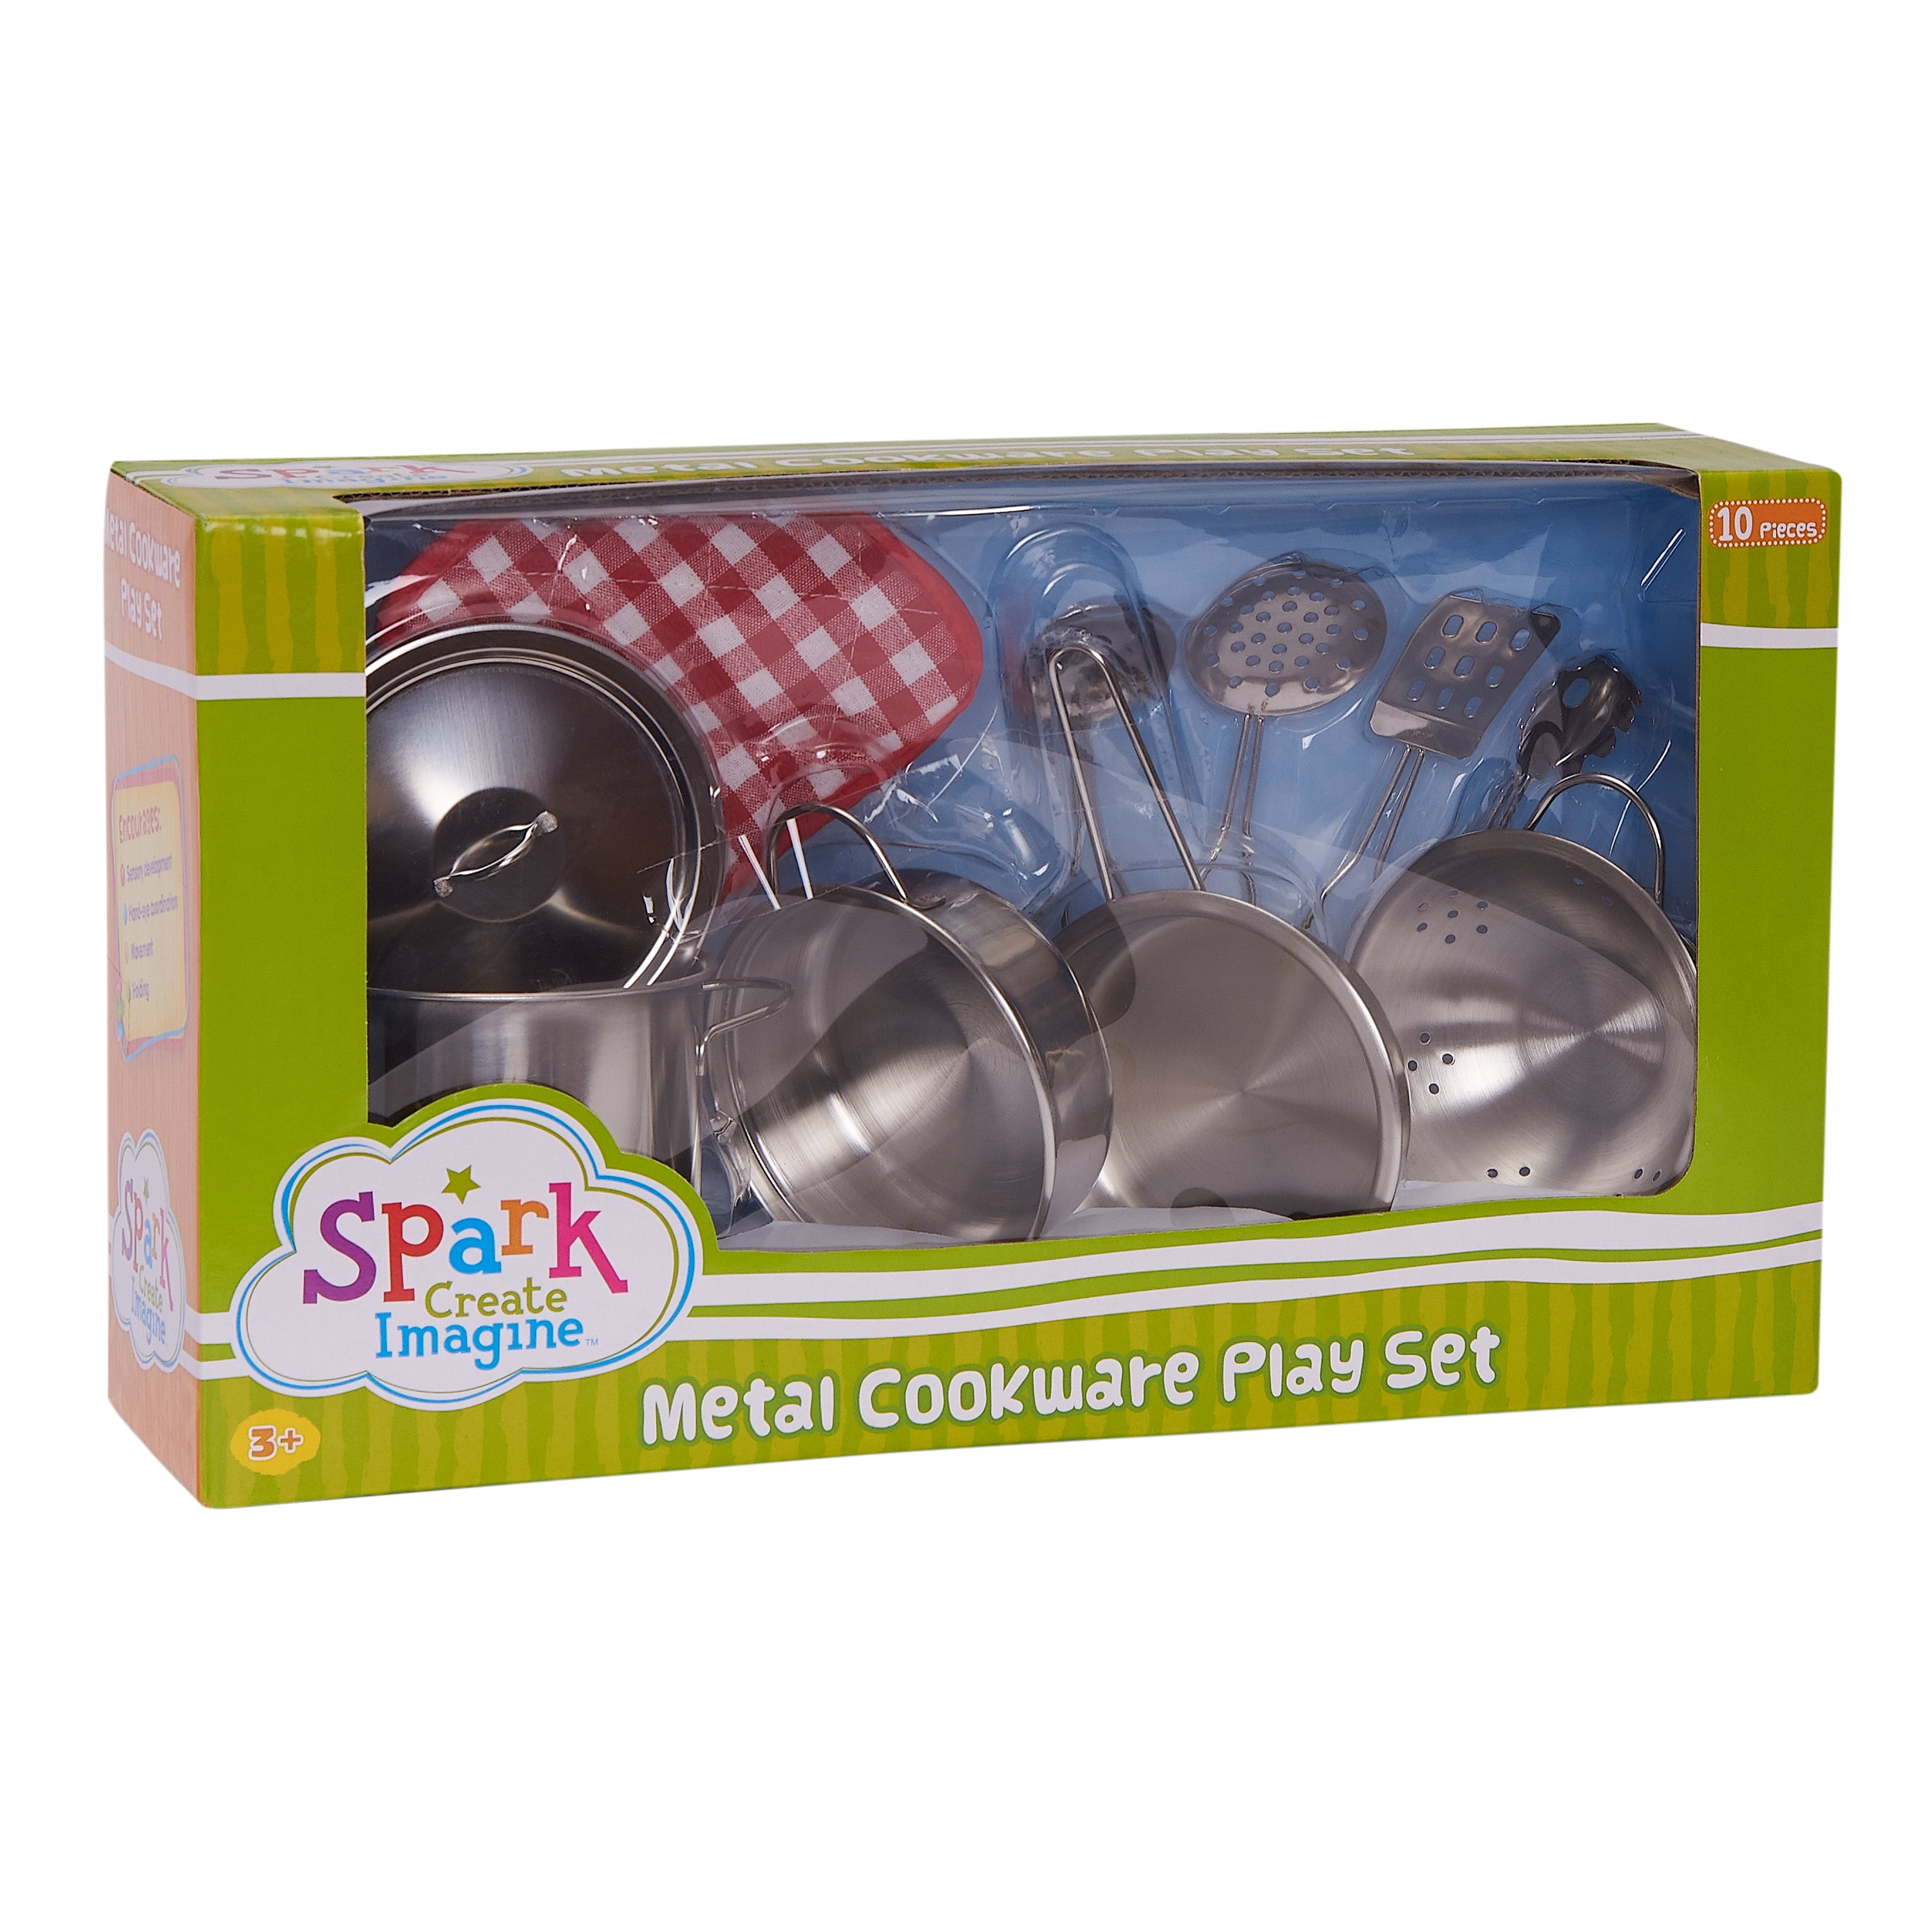 Spark Create Imagine Metal Cookware Play Set 10 Piece new *box damage 